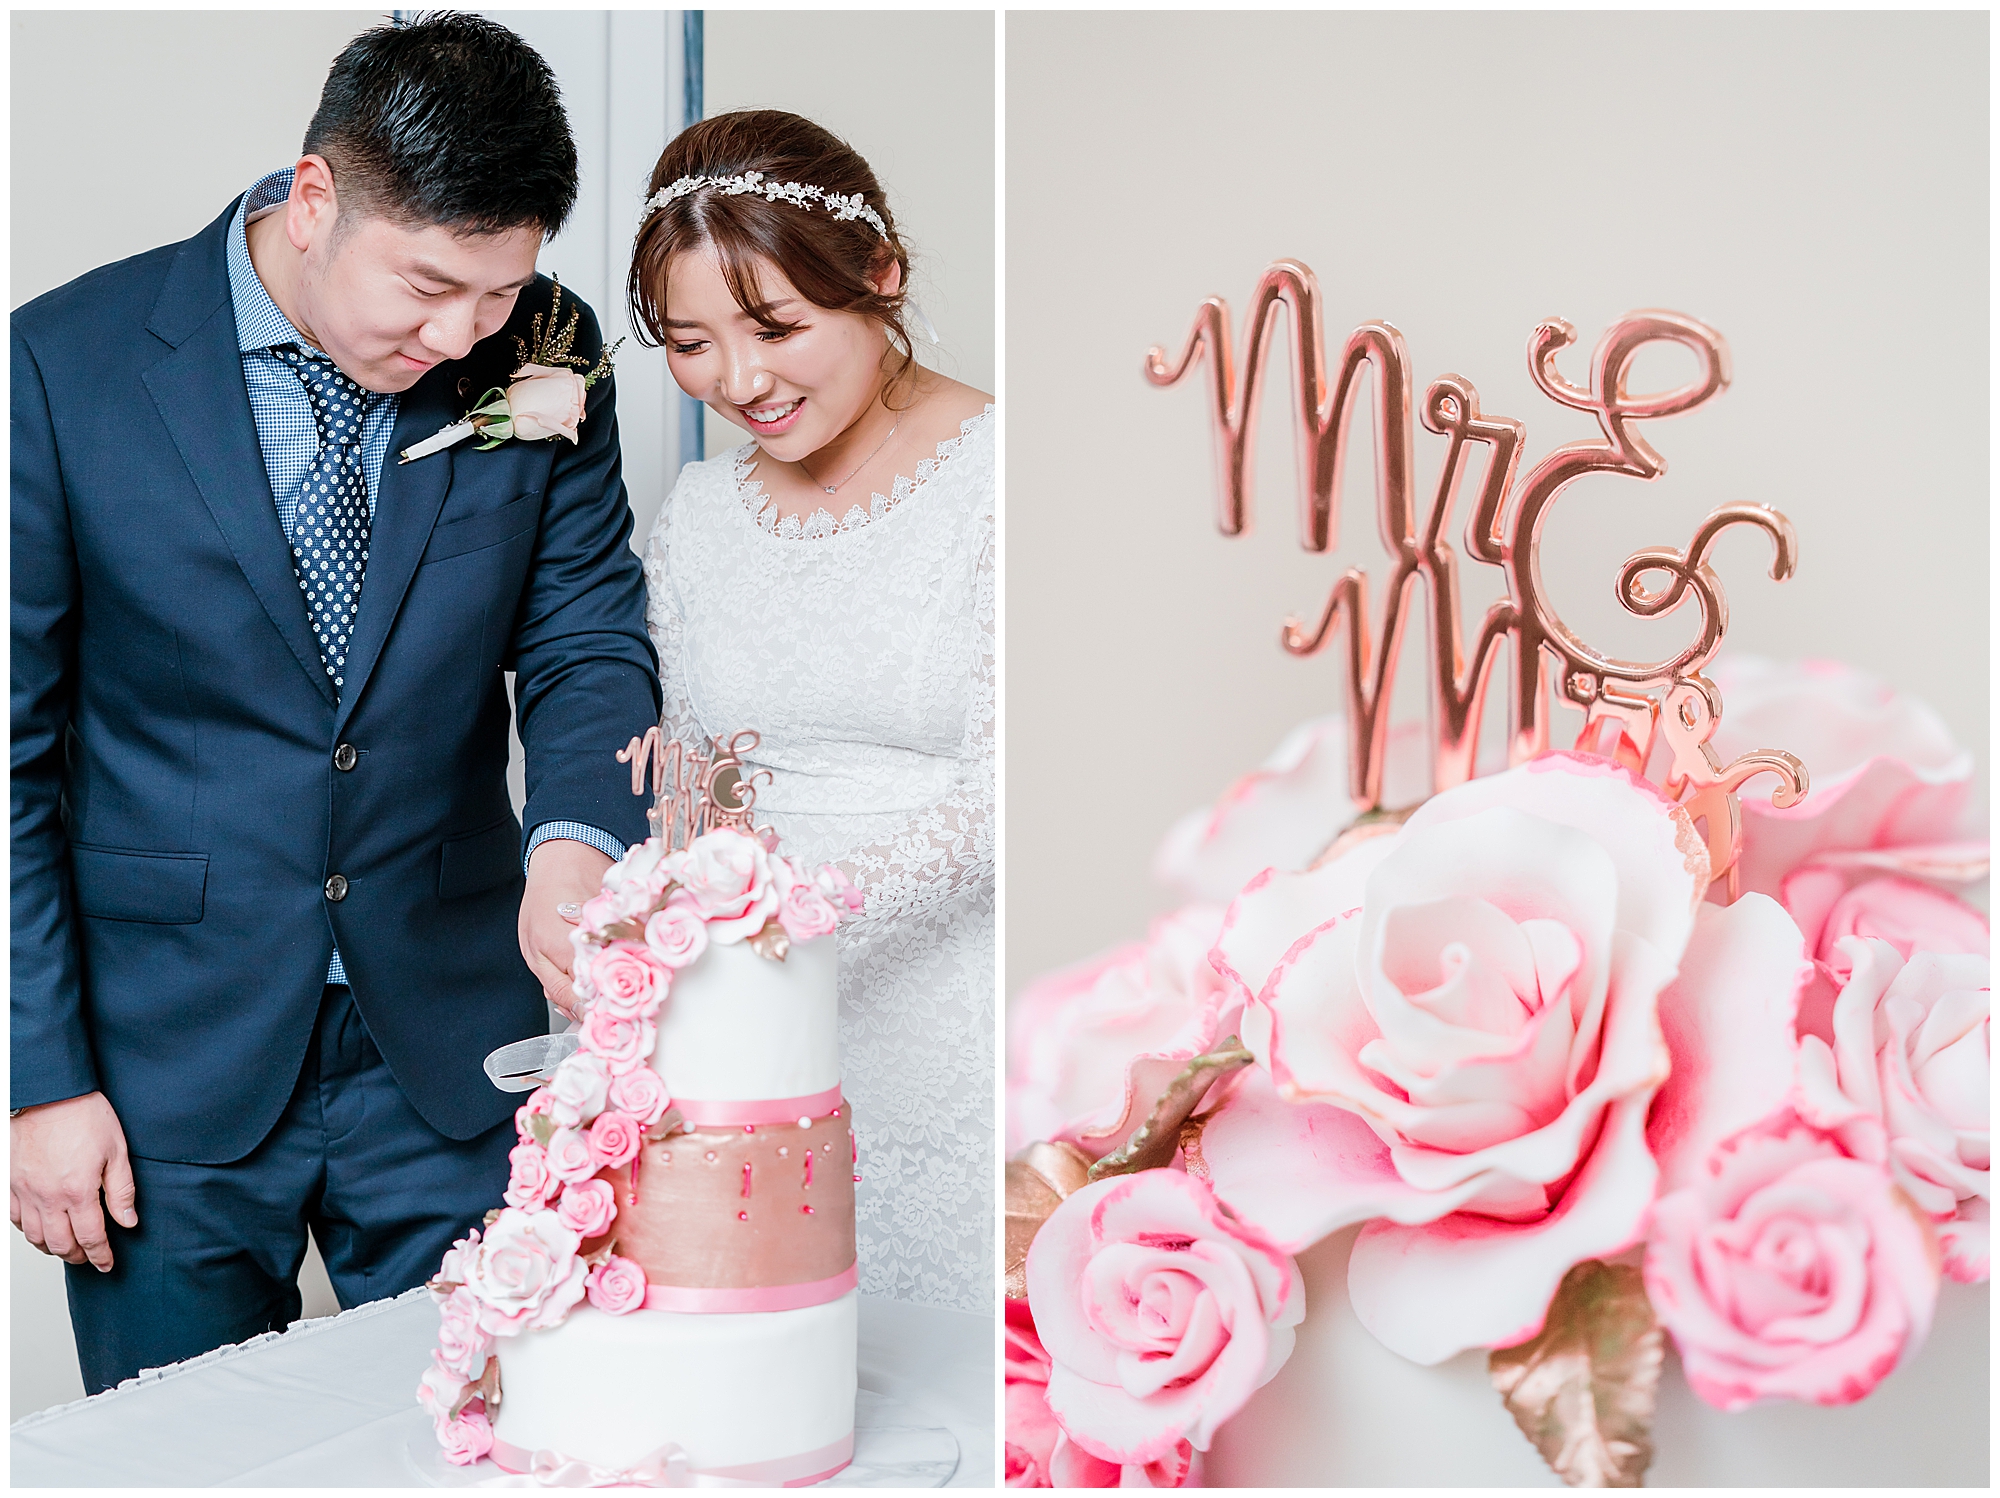 Cake cutting | wedding photographer